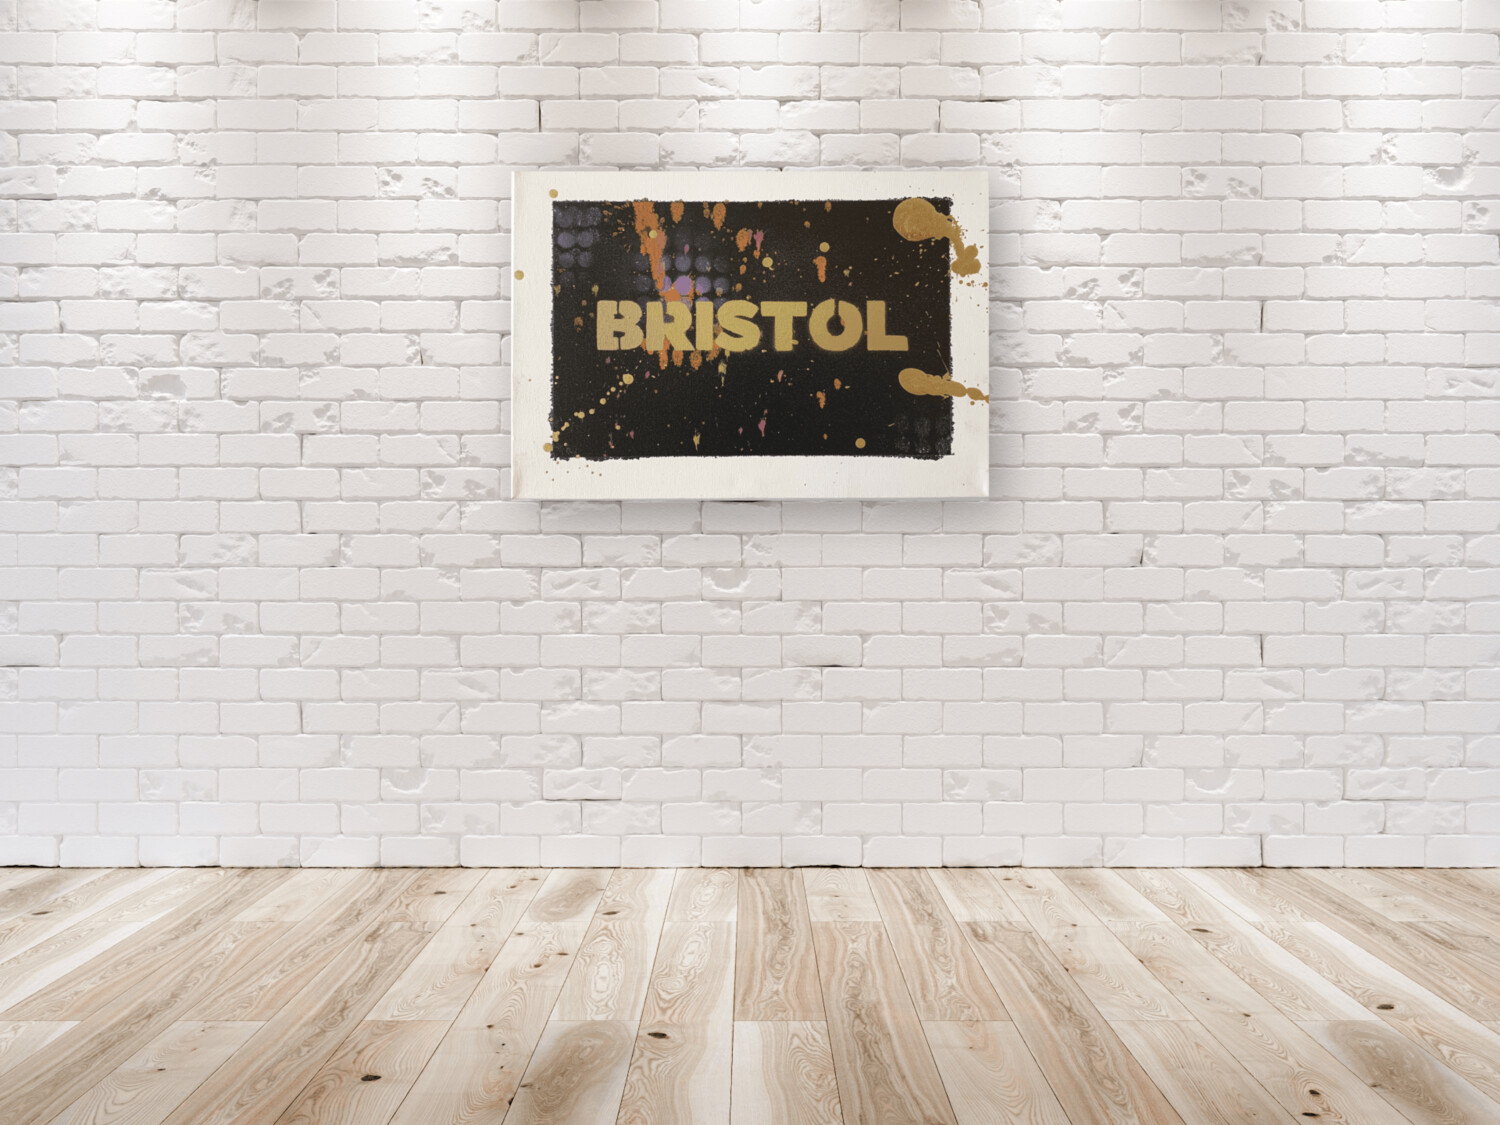 Bristol Stencil - Black with large gold splats